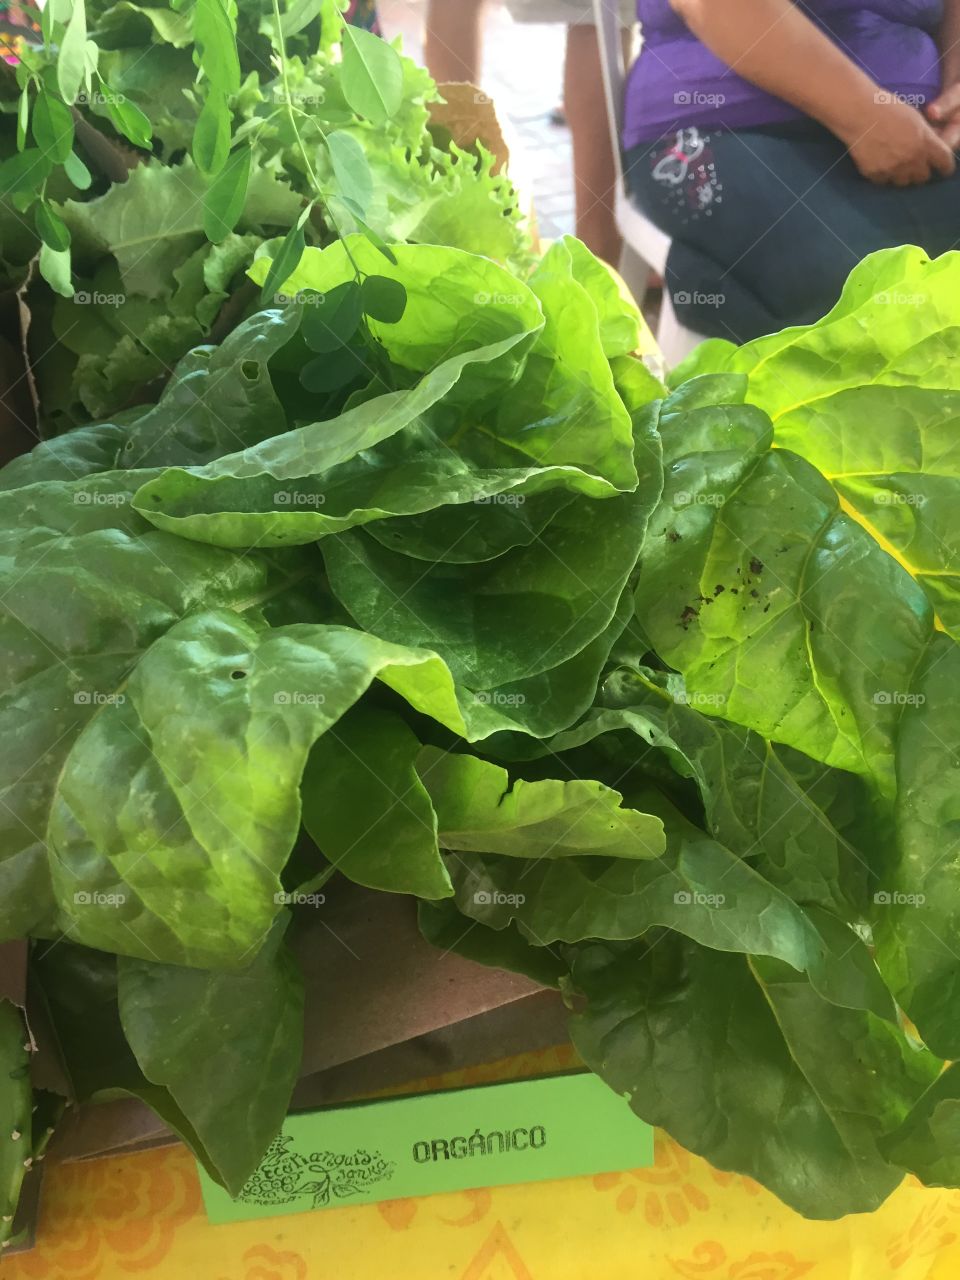 Organic lettuce at farmers market